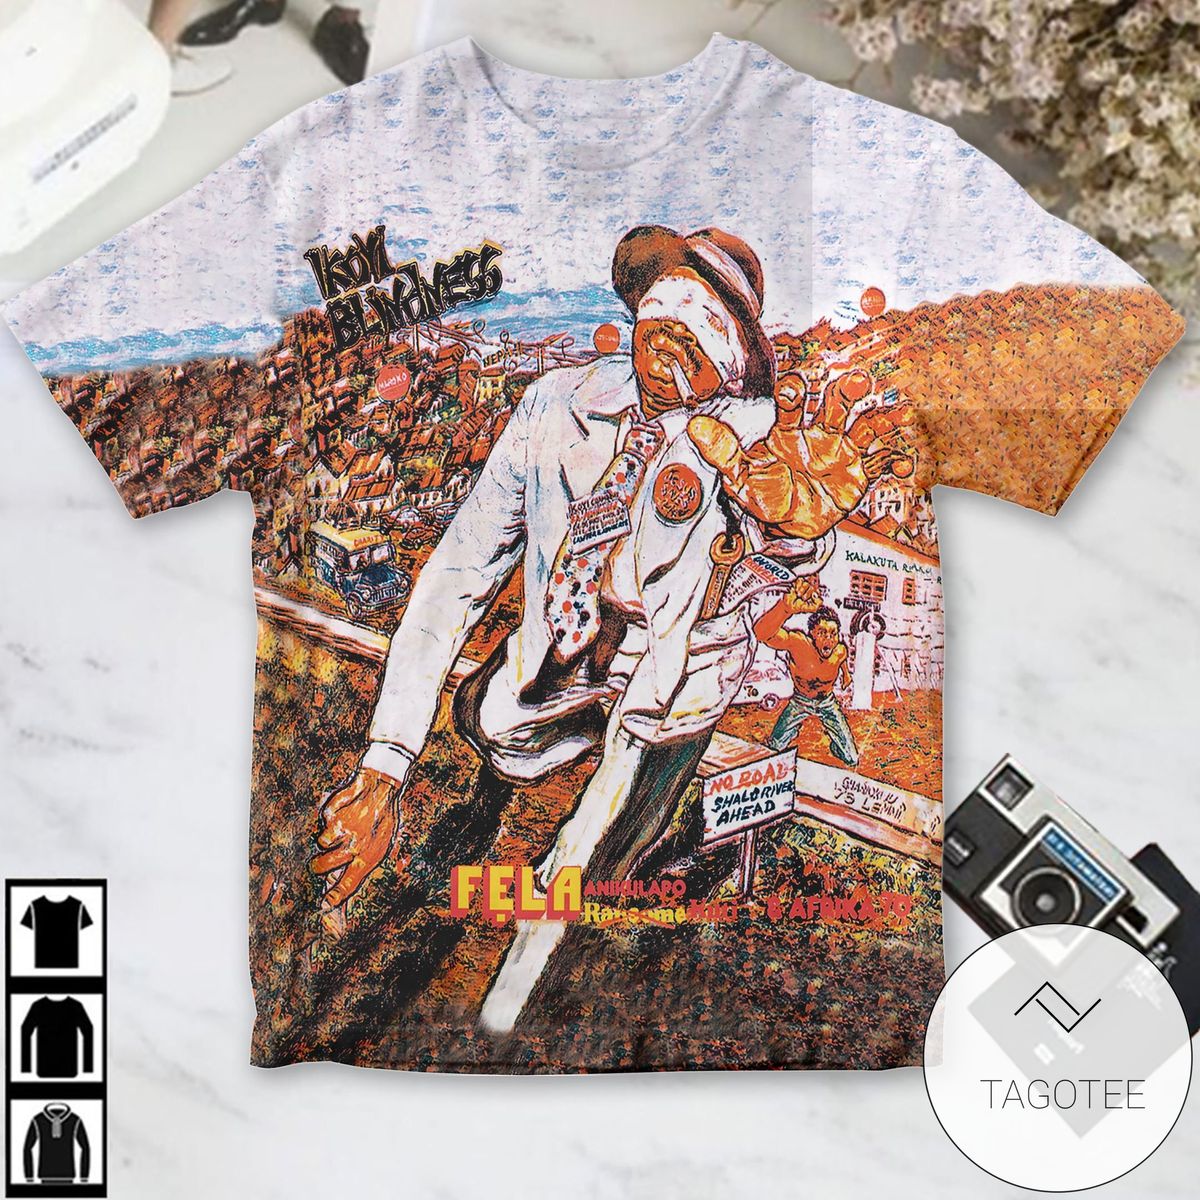 Fela Kuti Ikoyi Blindness Album Cover Shirt